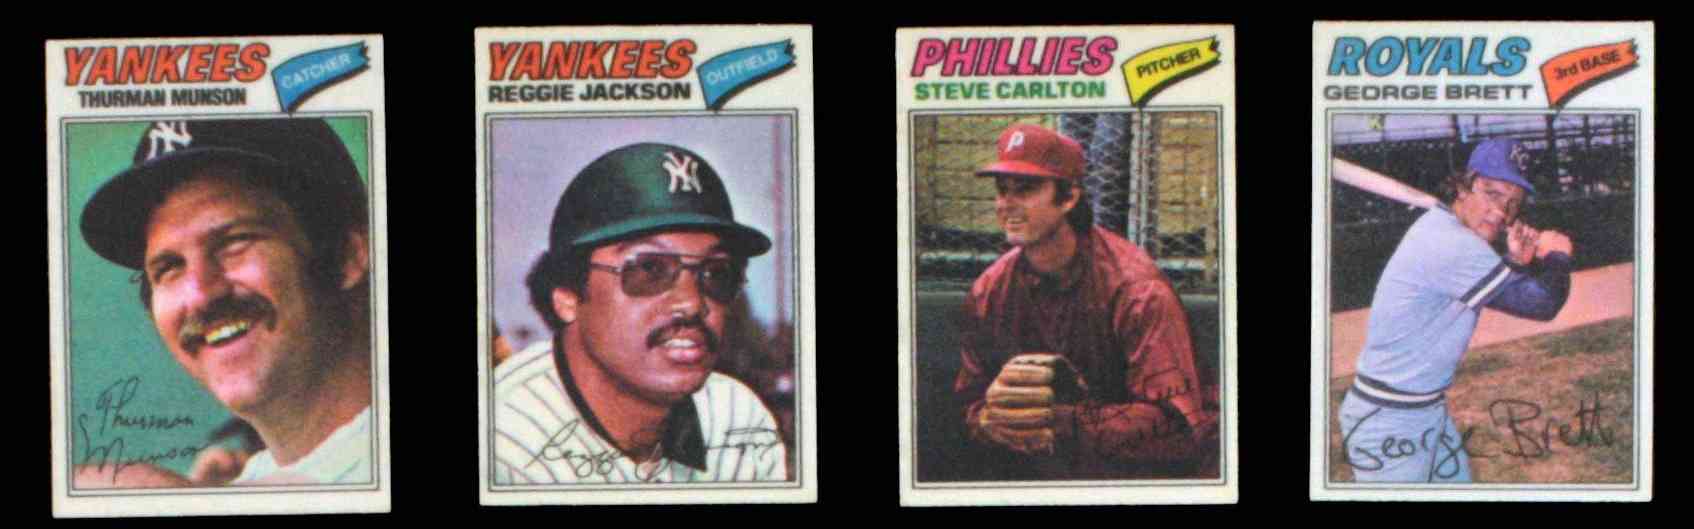 1977 Topps Cloth Stickers #22 Reggie Jackson [** VAR:] (Yankees) Baseball cards value